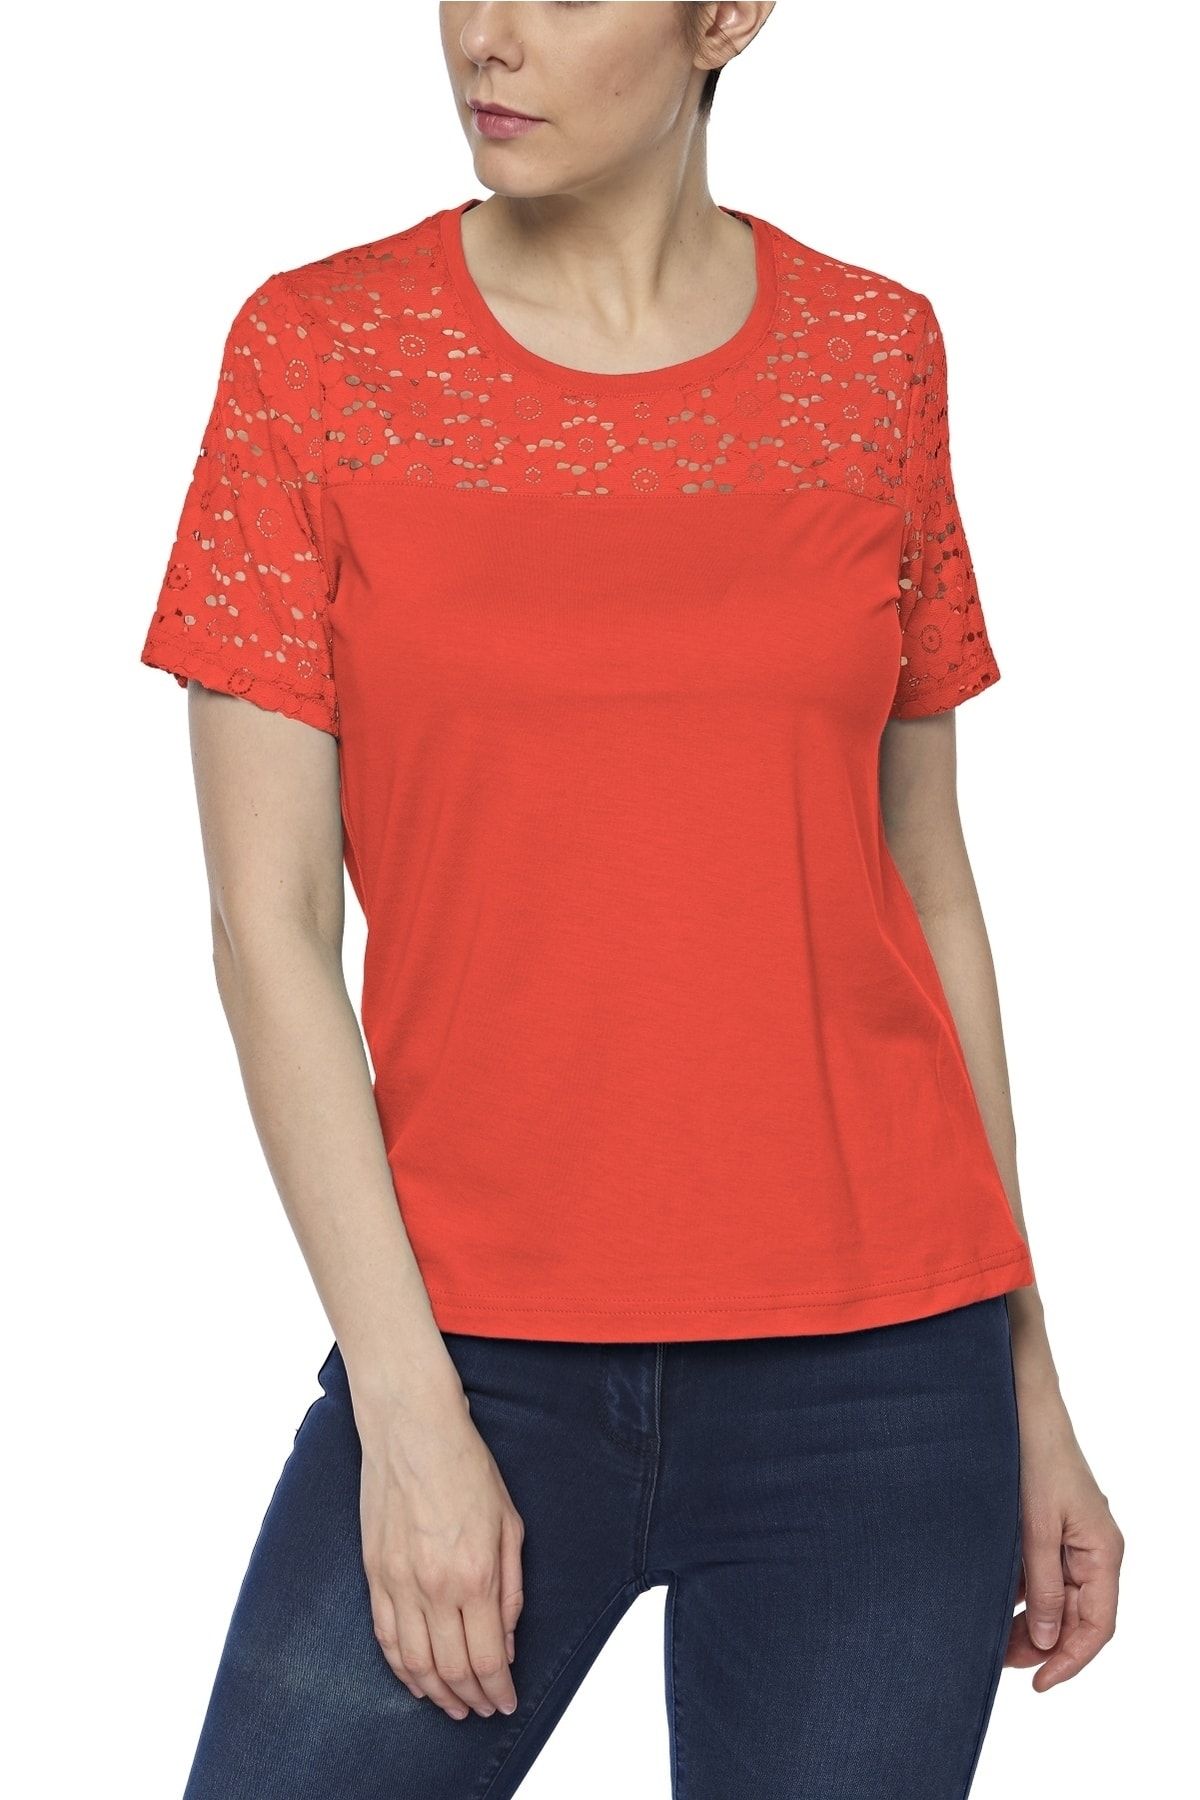 fsm1453 Kadın Pamuklu Modal Kısa Kollu Dantelli Üst T-shirt